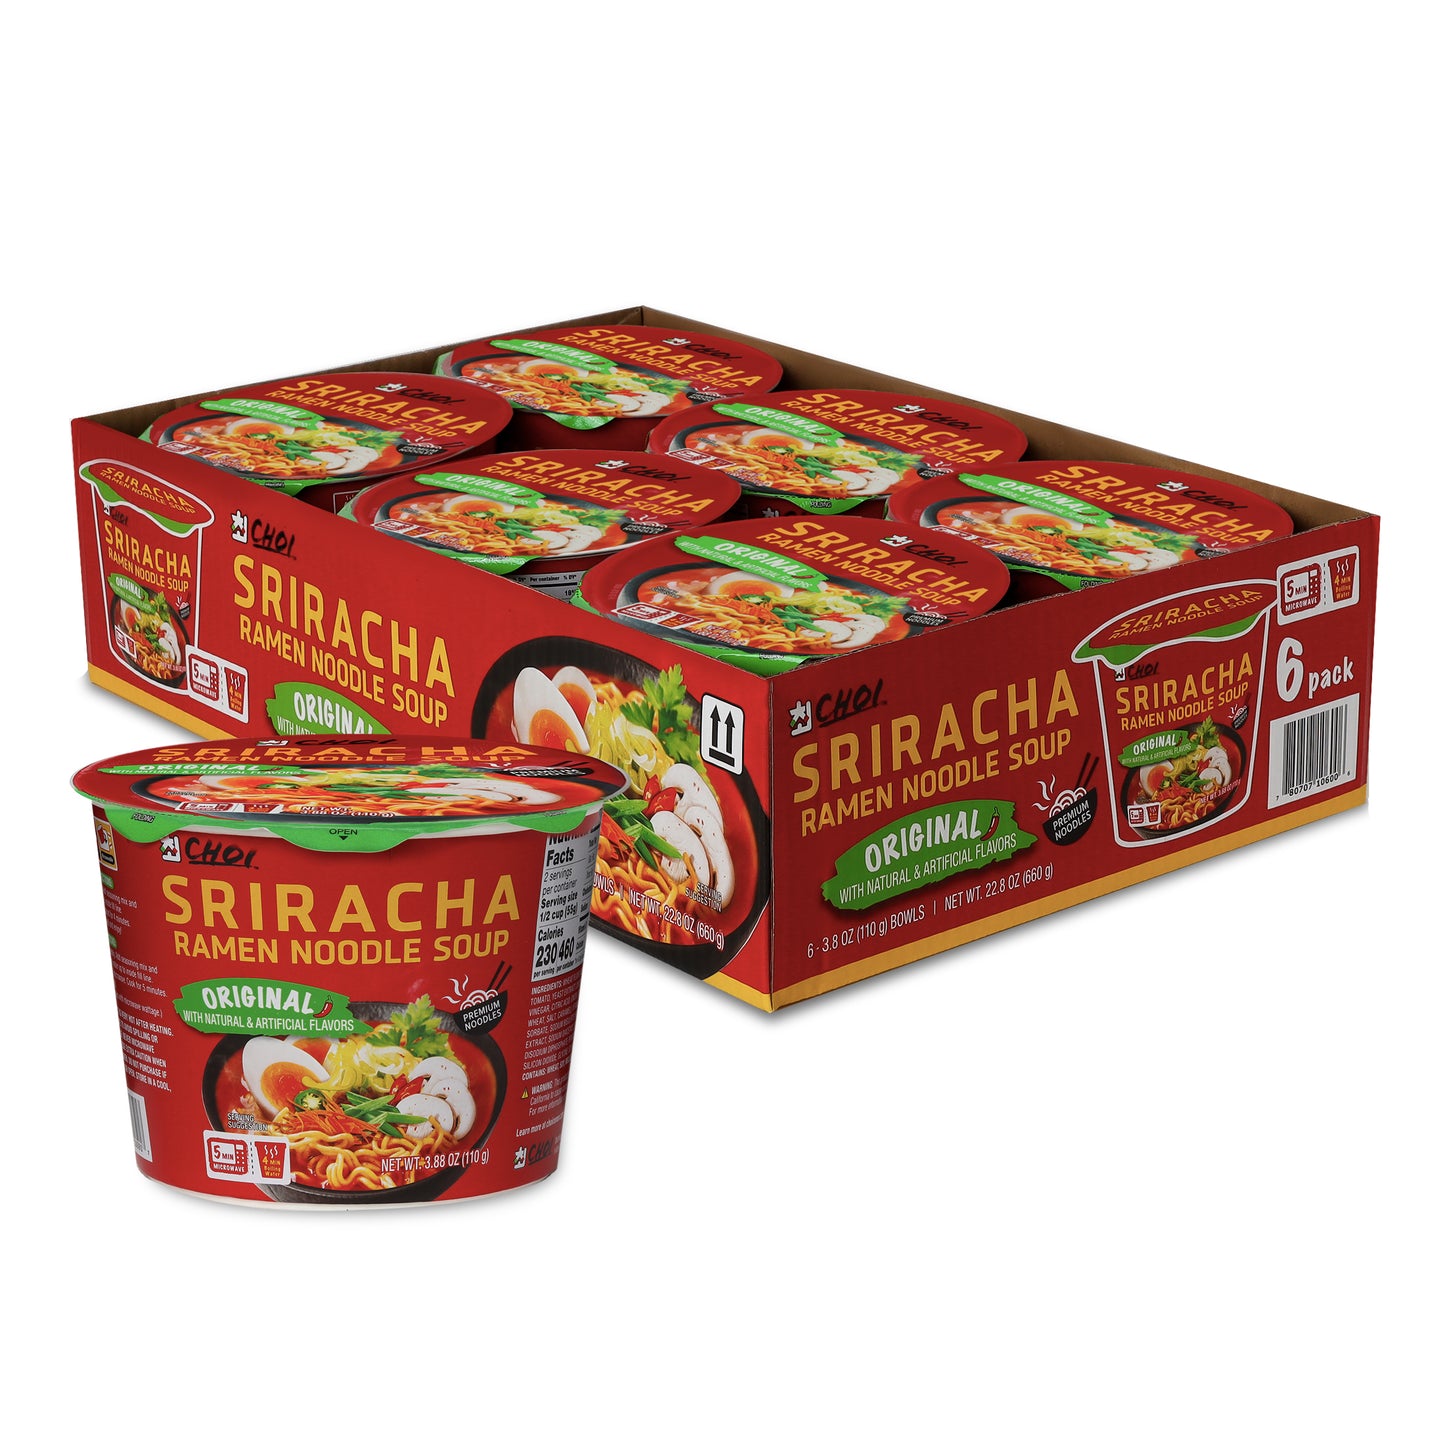 Choi Sriracha Ramen Original 110g Bowl (6-pack)